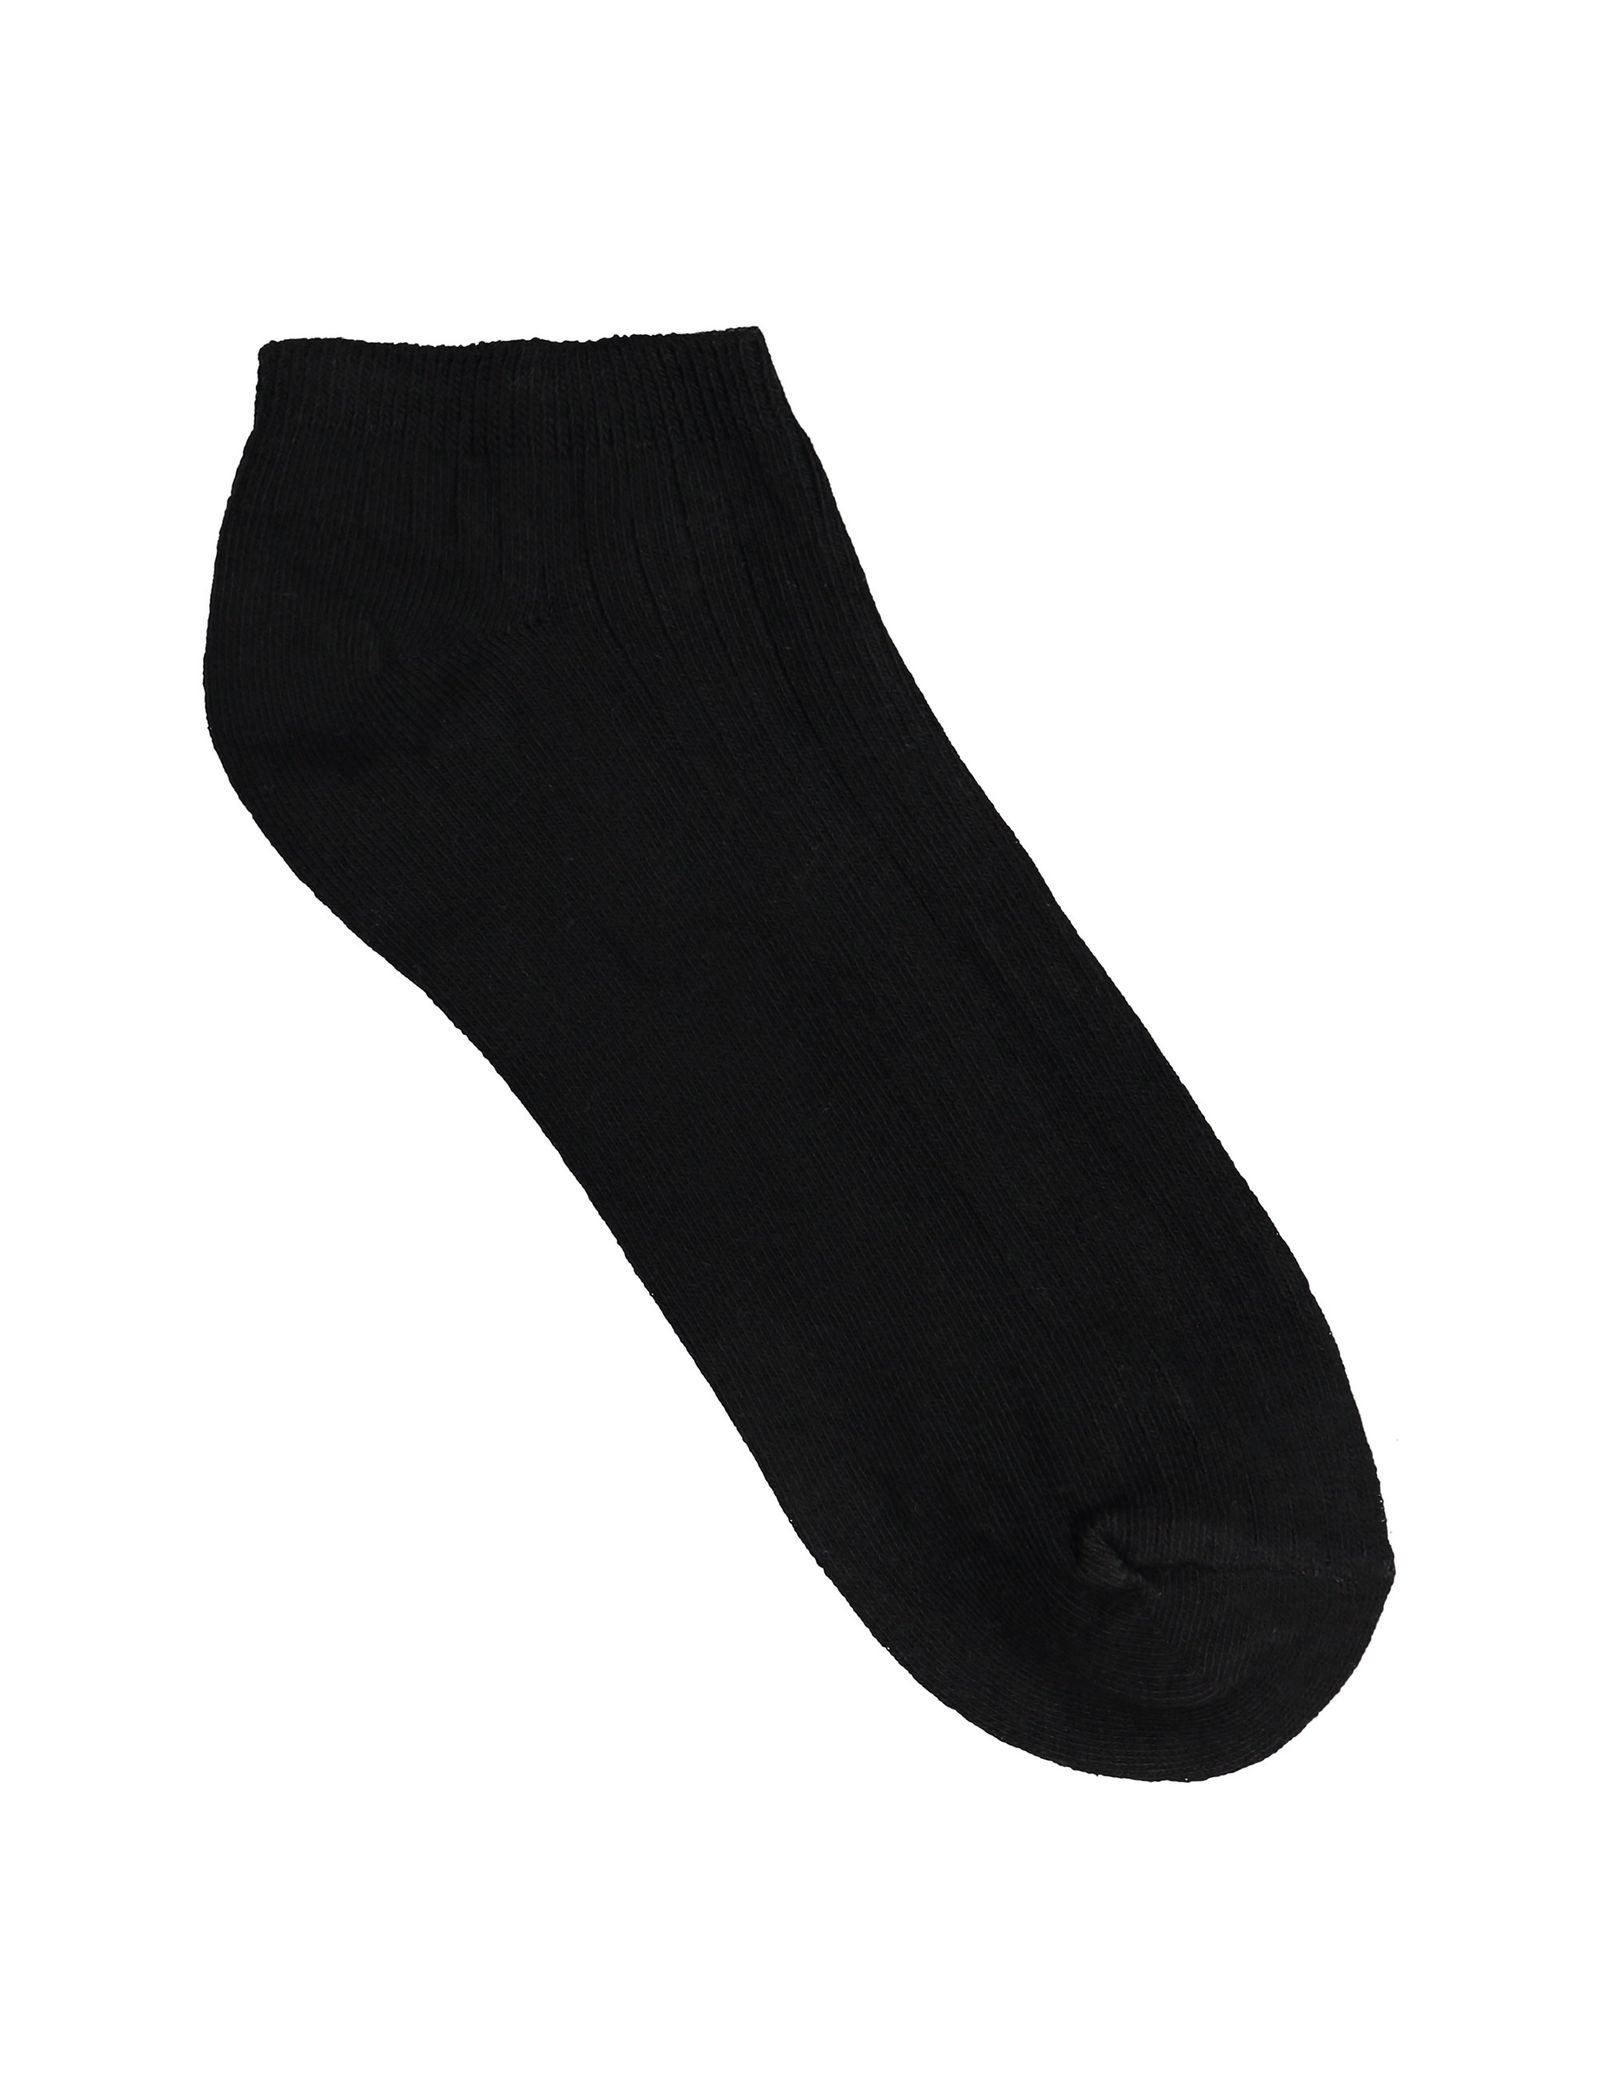 جوراب ساق کوتاه مردانه بسته 4 عددی - دفکتو - چند رنگ - 6